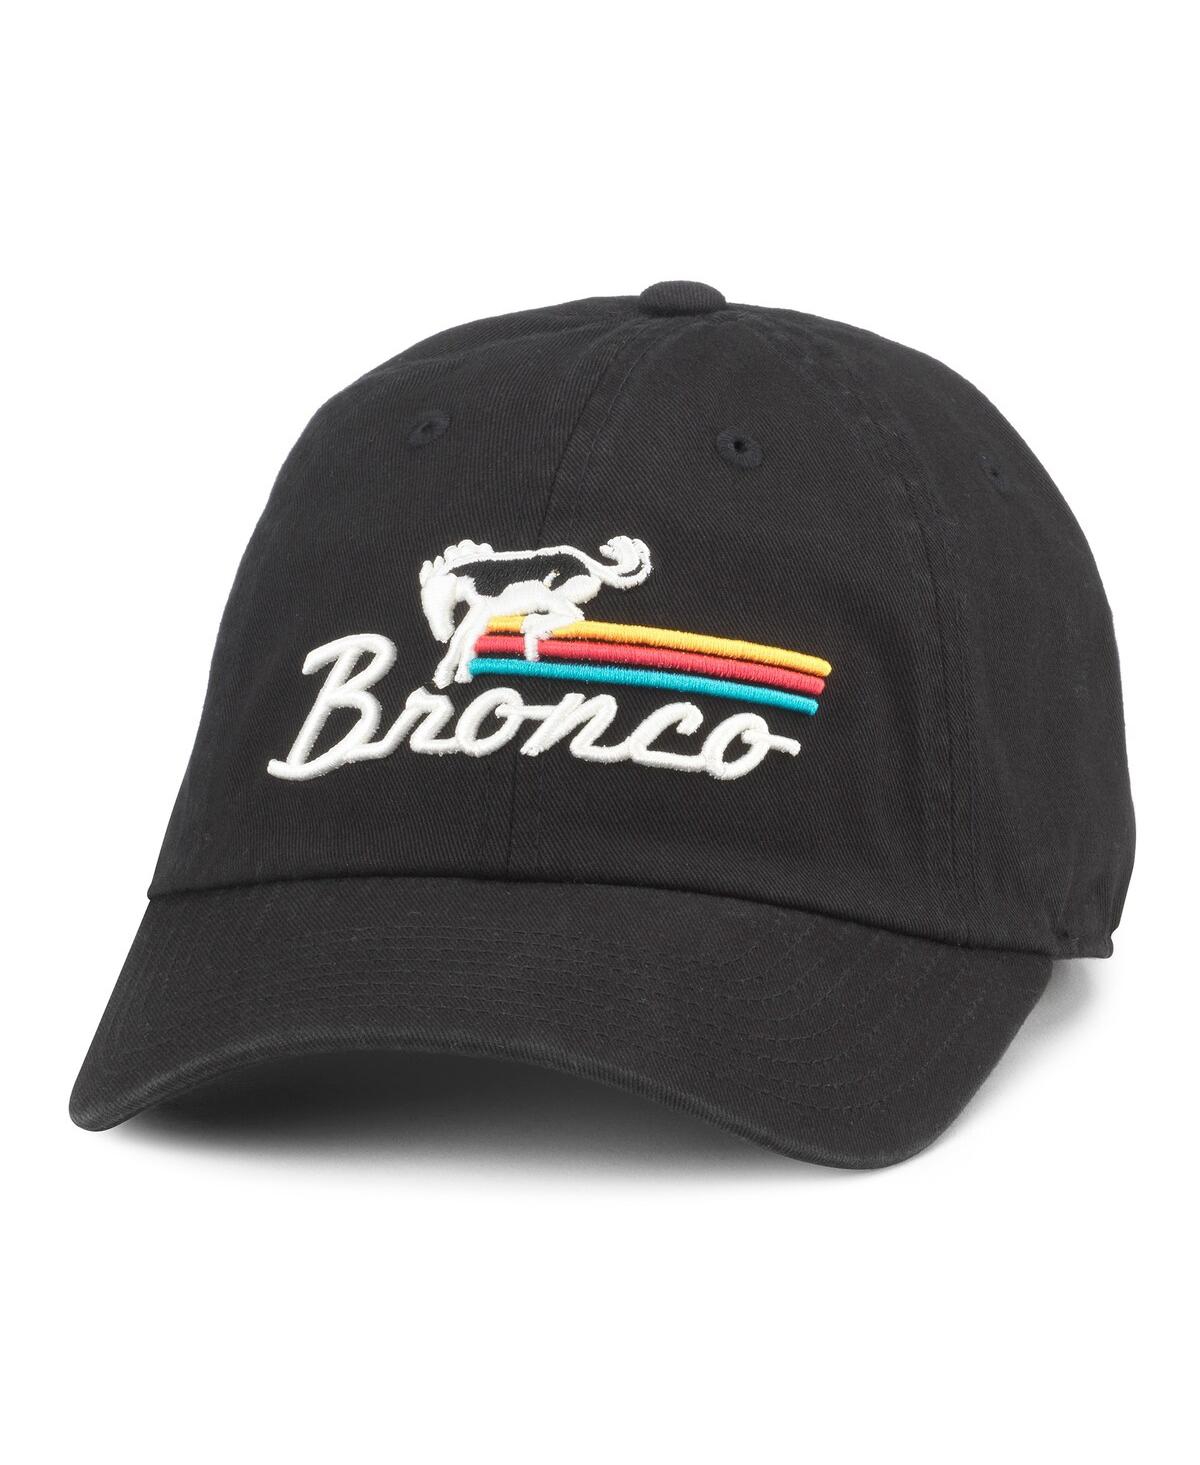 American Needle Men's And Women's  Black Ford Bronco Ballpark Adjustable Hat